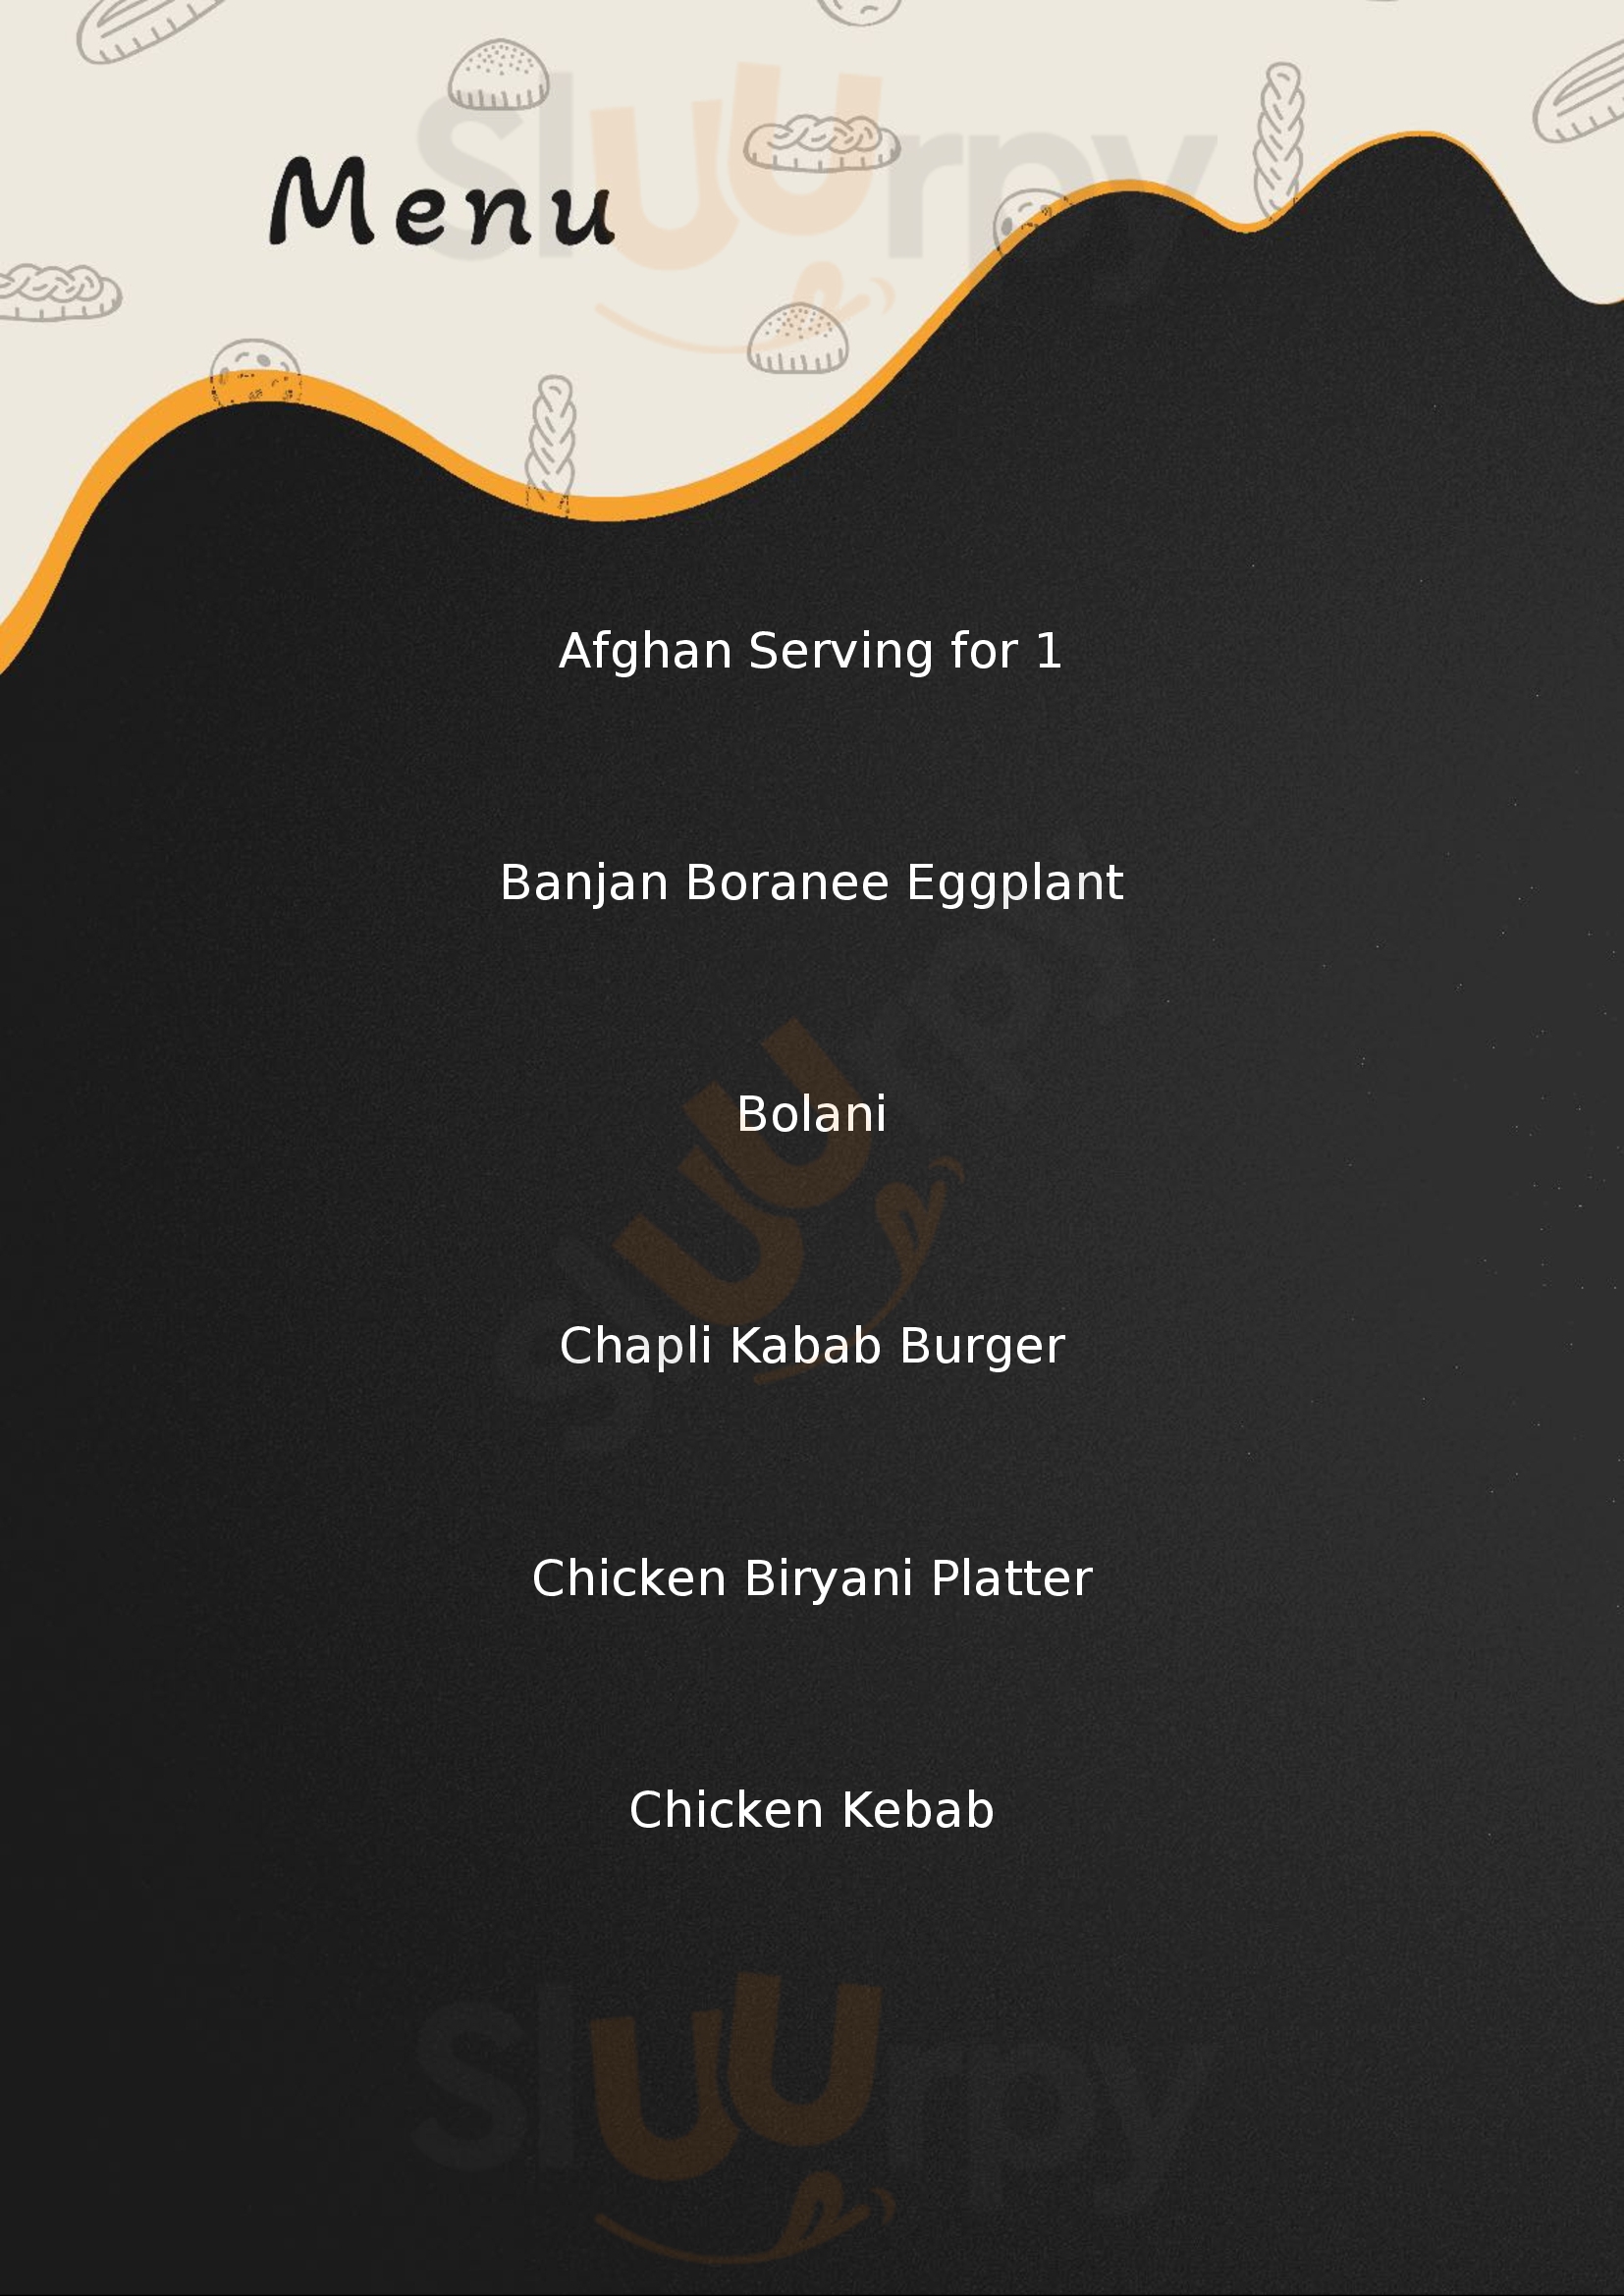 Afghan Darbar Restaurant & Takeaway Palmerston North Menu - 1